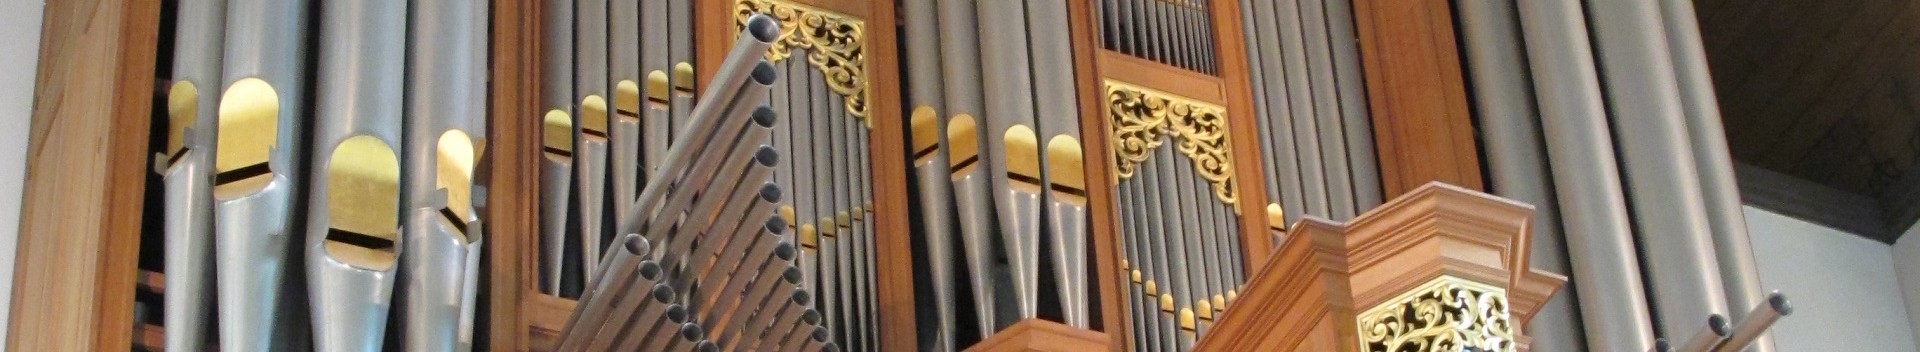 Stichting Orgelconcerten Grote Kerk Den Haag